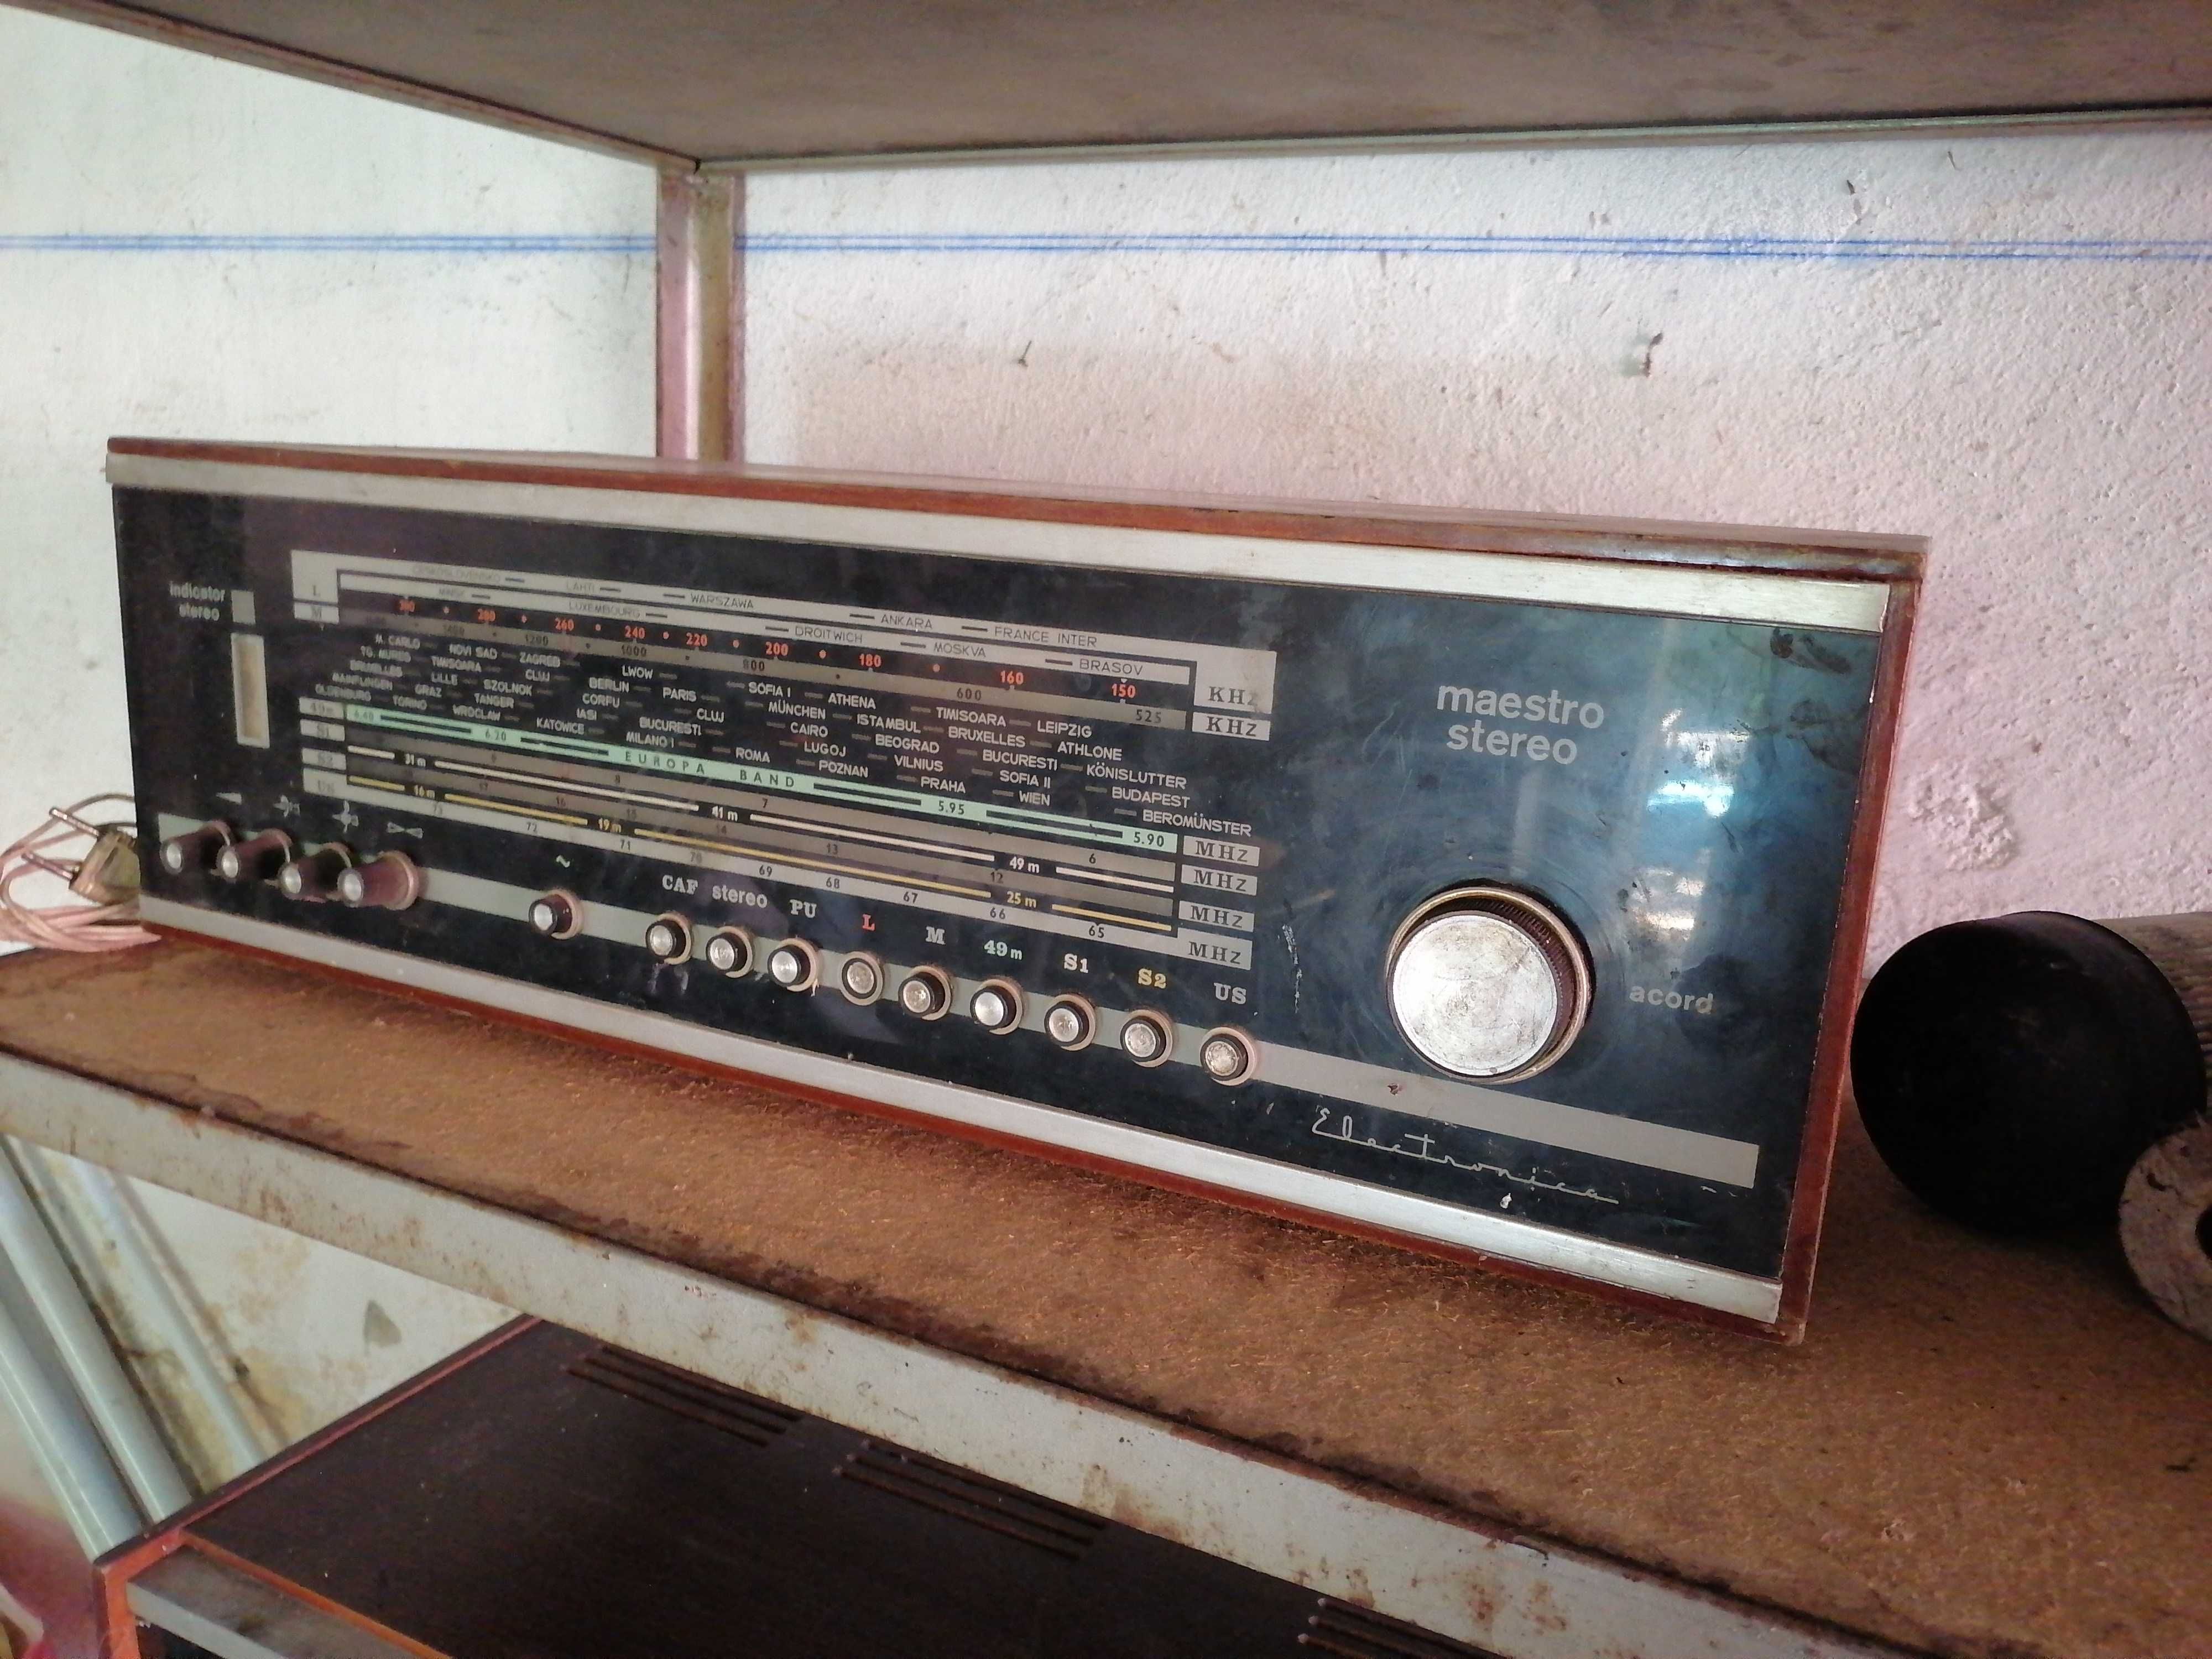 Radio maestro stereo